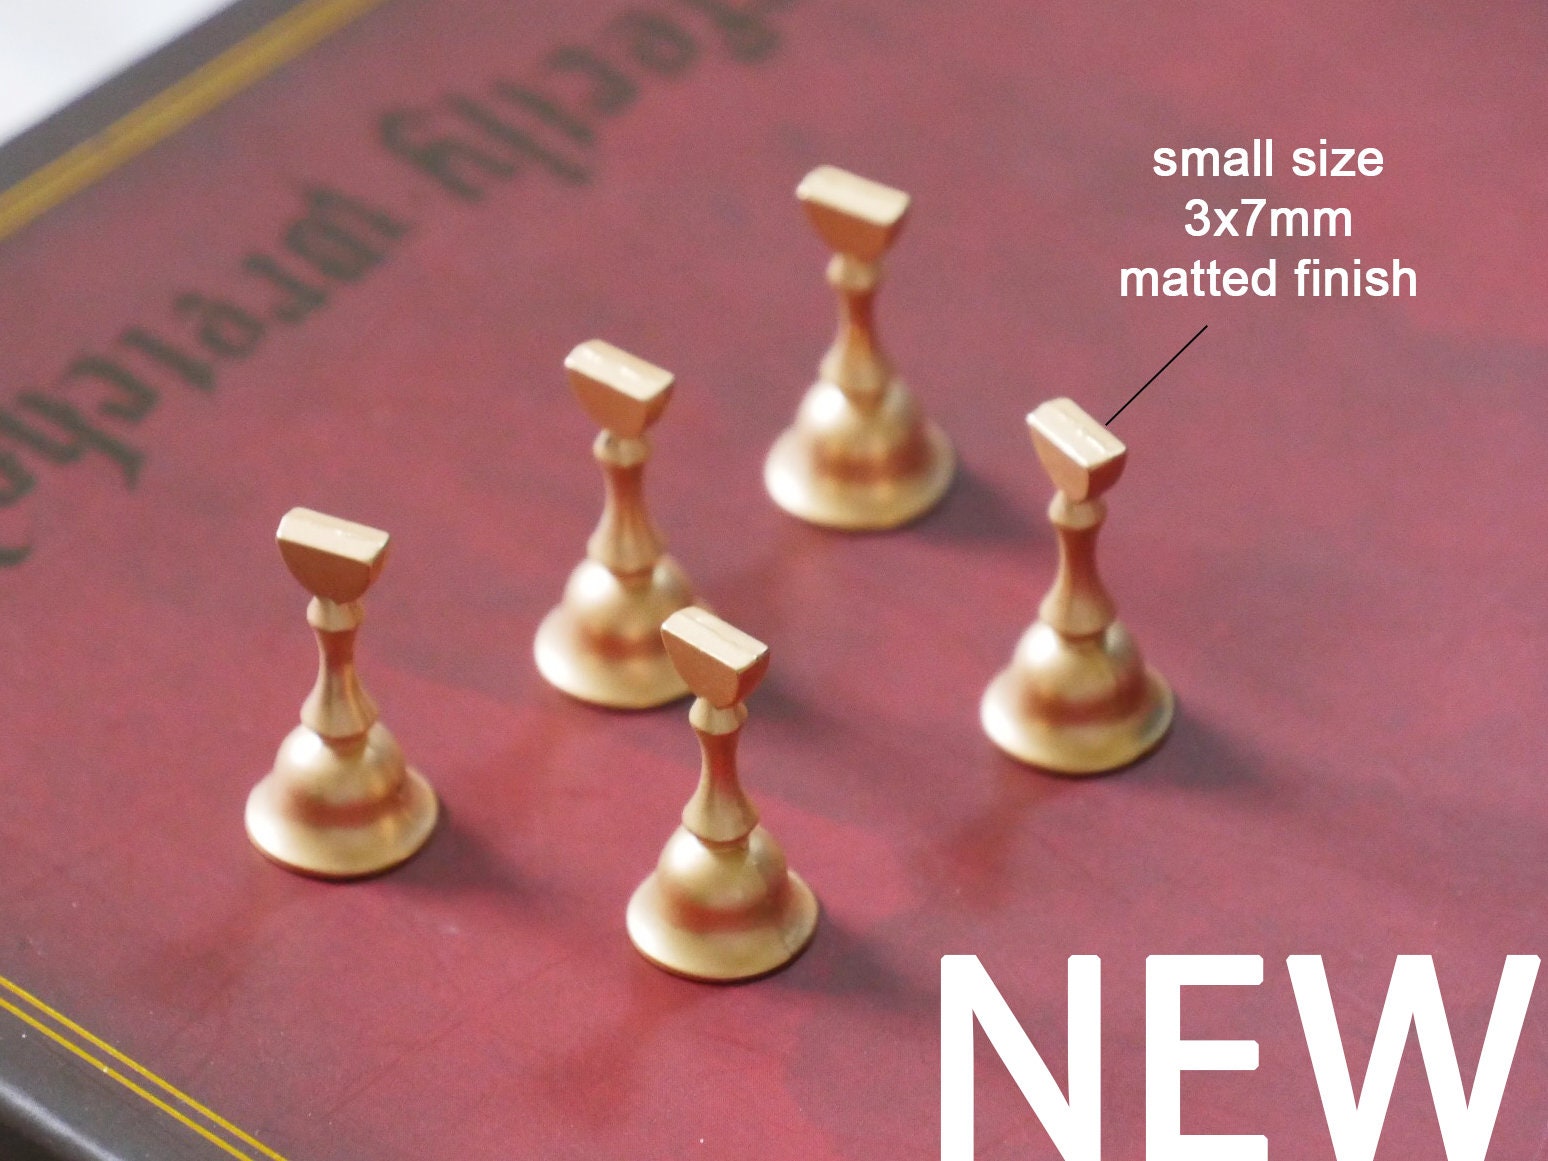 5pcs Metallic False Nail Holder Set/ Magnetic Nail Art Practice Holder/Metal Silver Gold Nail Shelf Manicure DIY Tools for Nail Tutorial